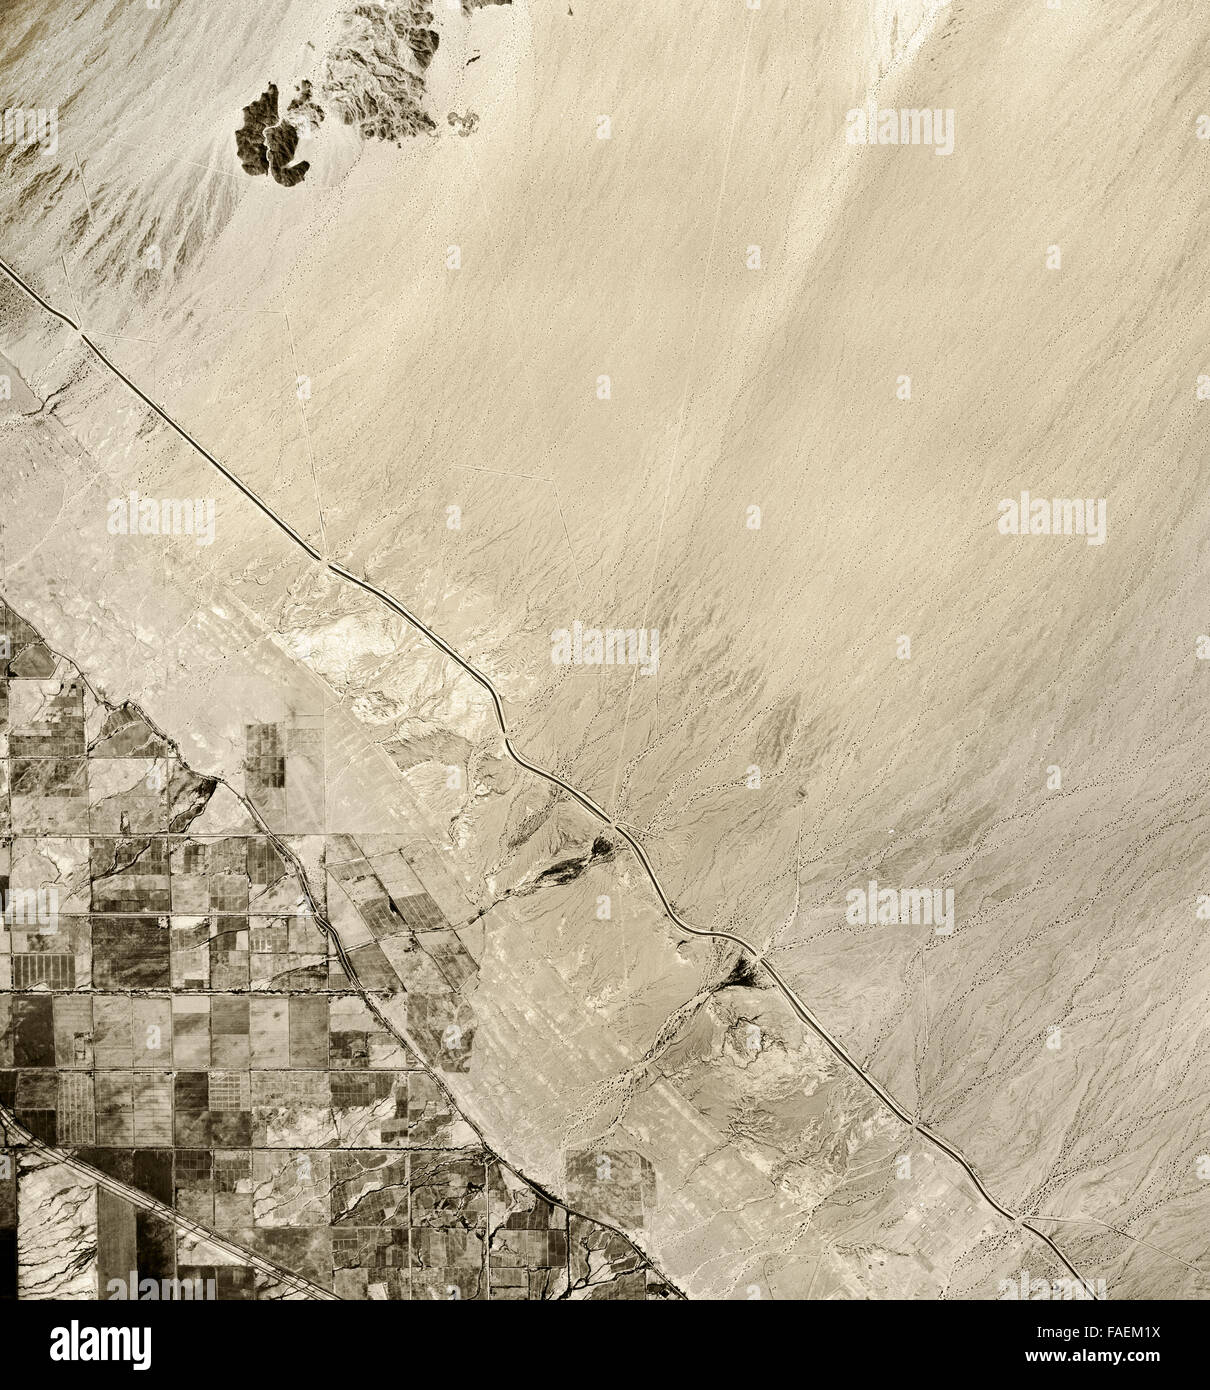 Fotografía aérea infrarroja histórico del Mar de Salton, California,1954 Foto de stock